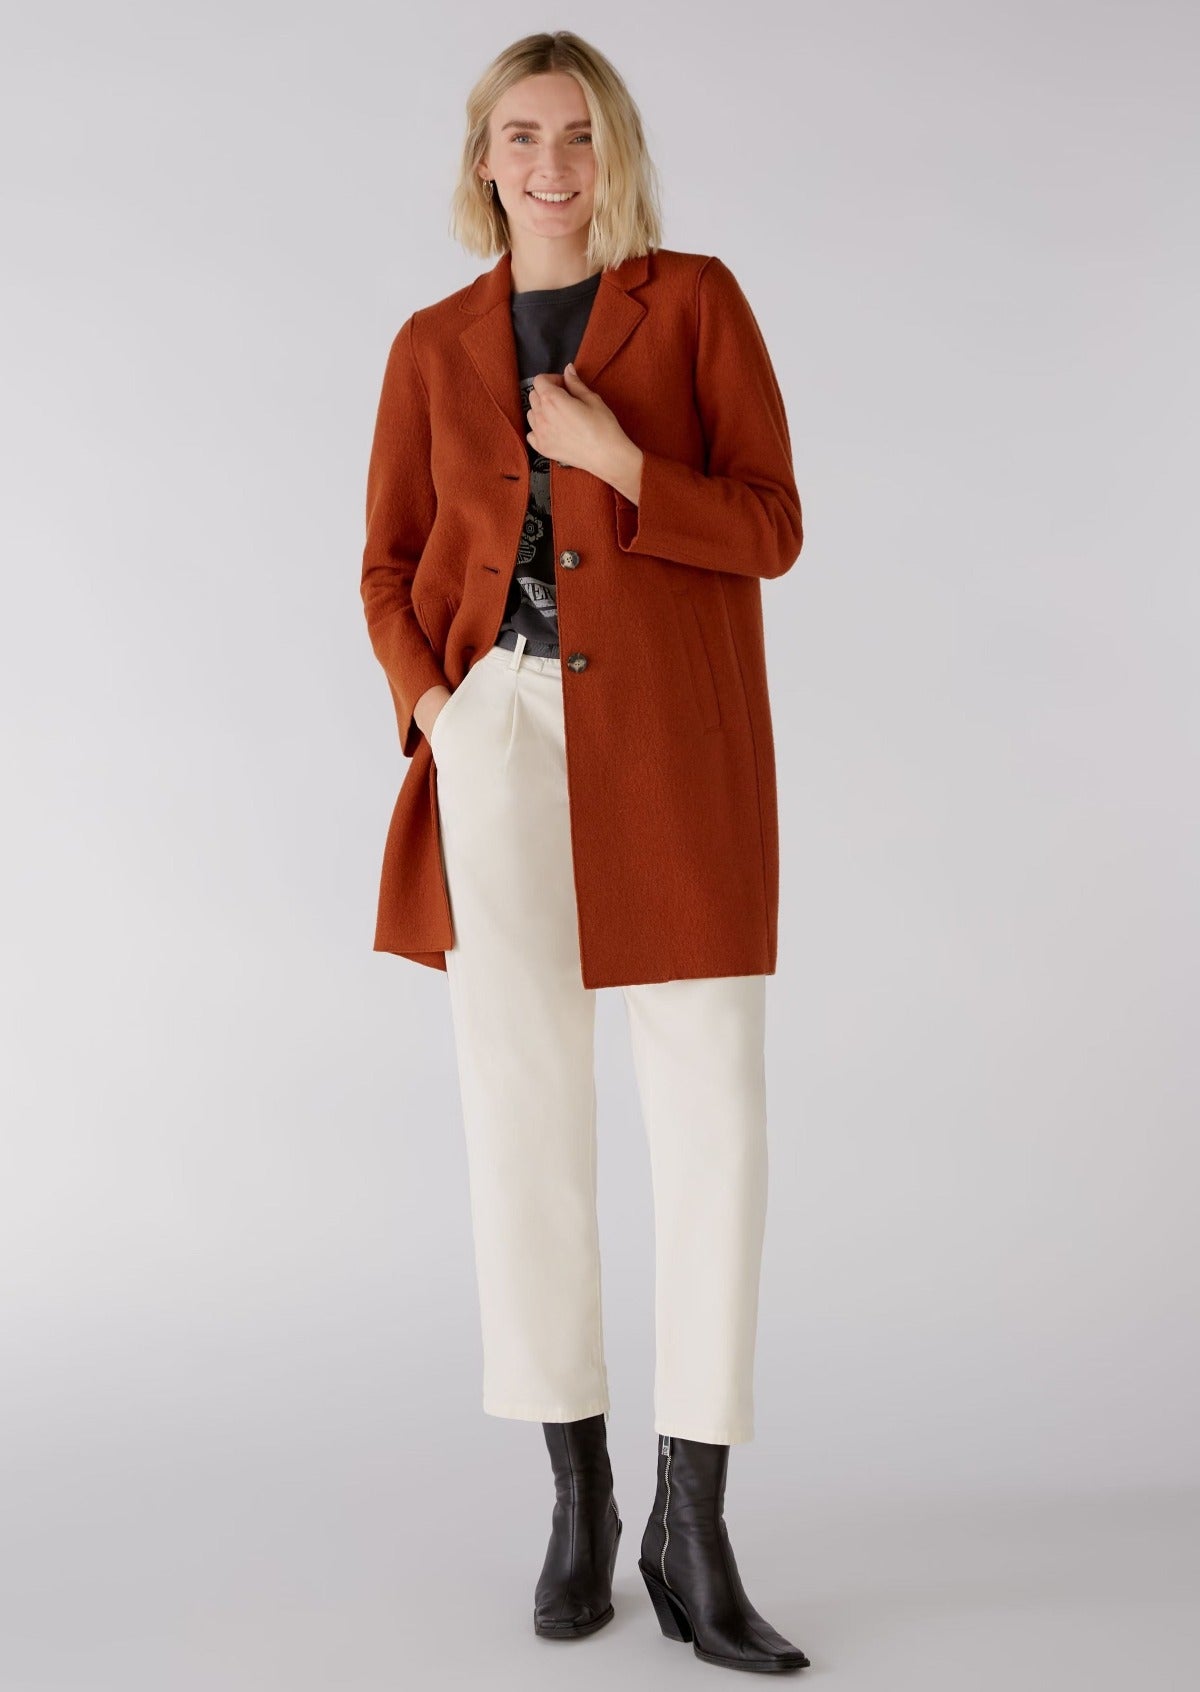 Classic Wool Coat in Cinnamon 2996